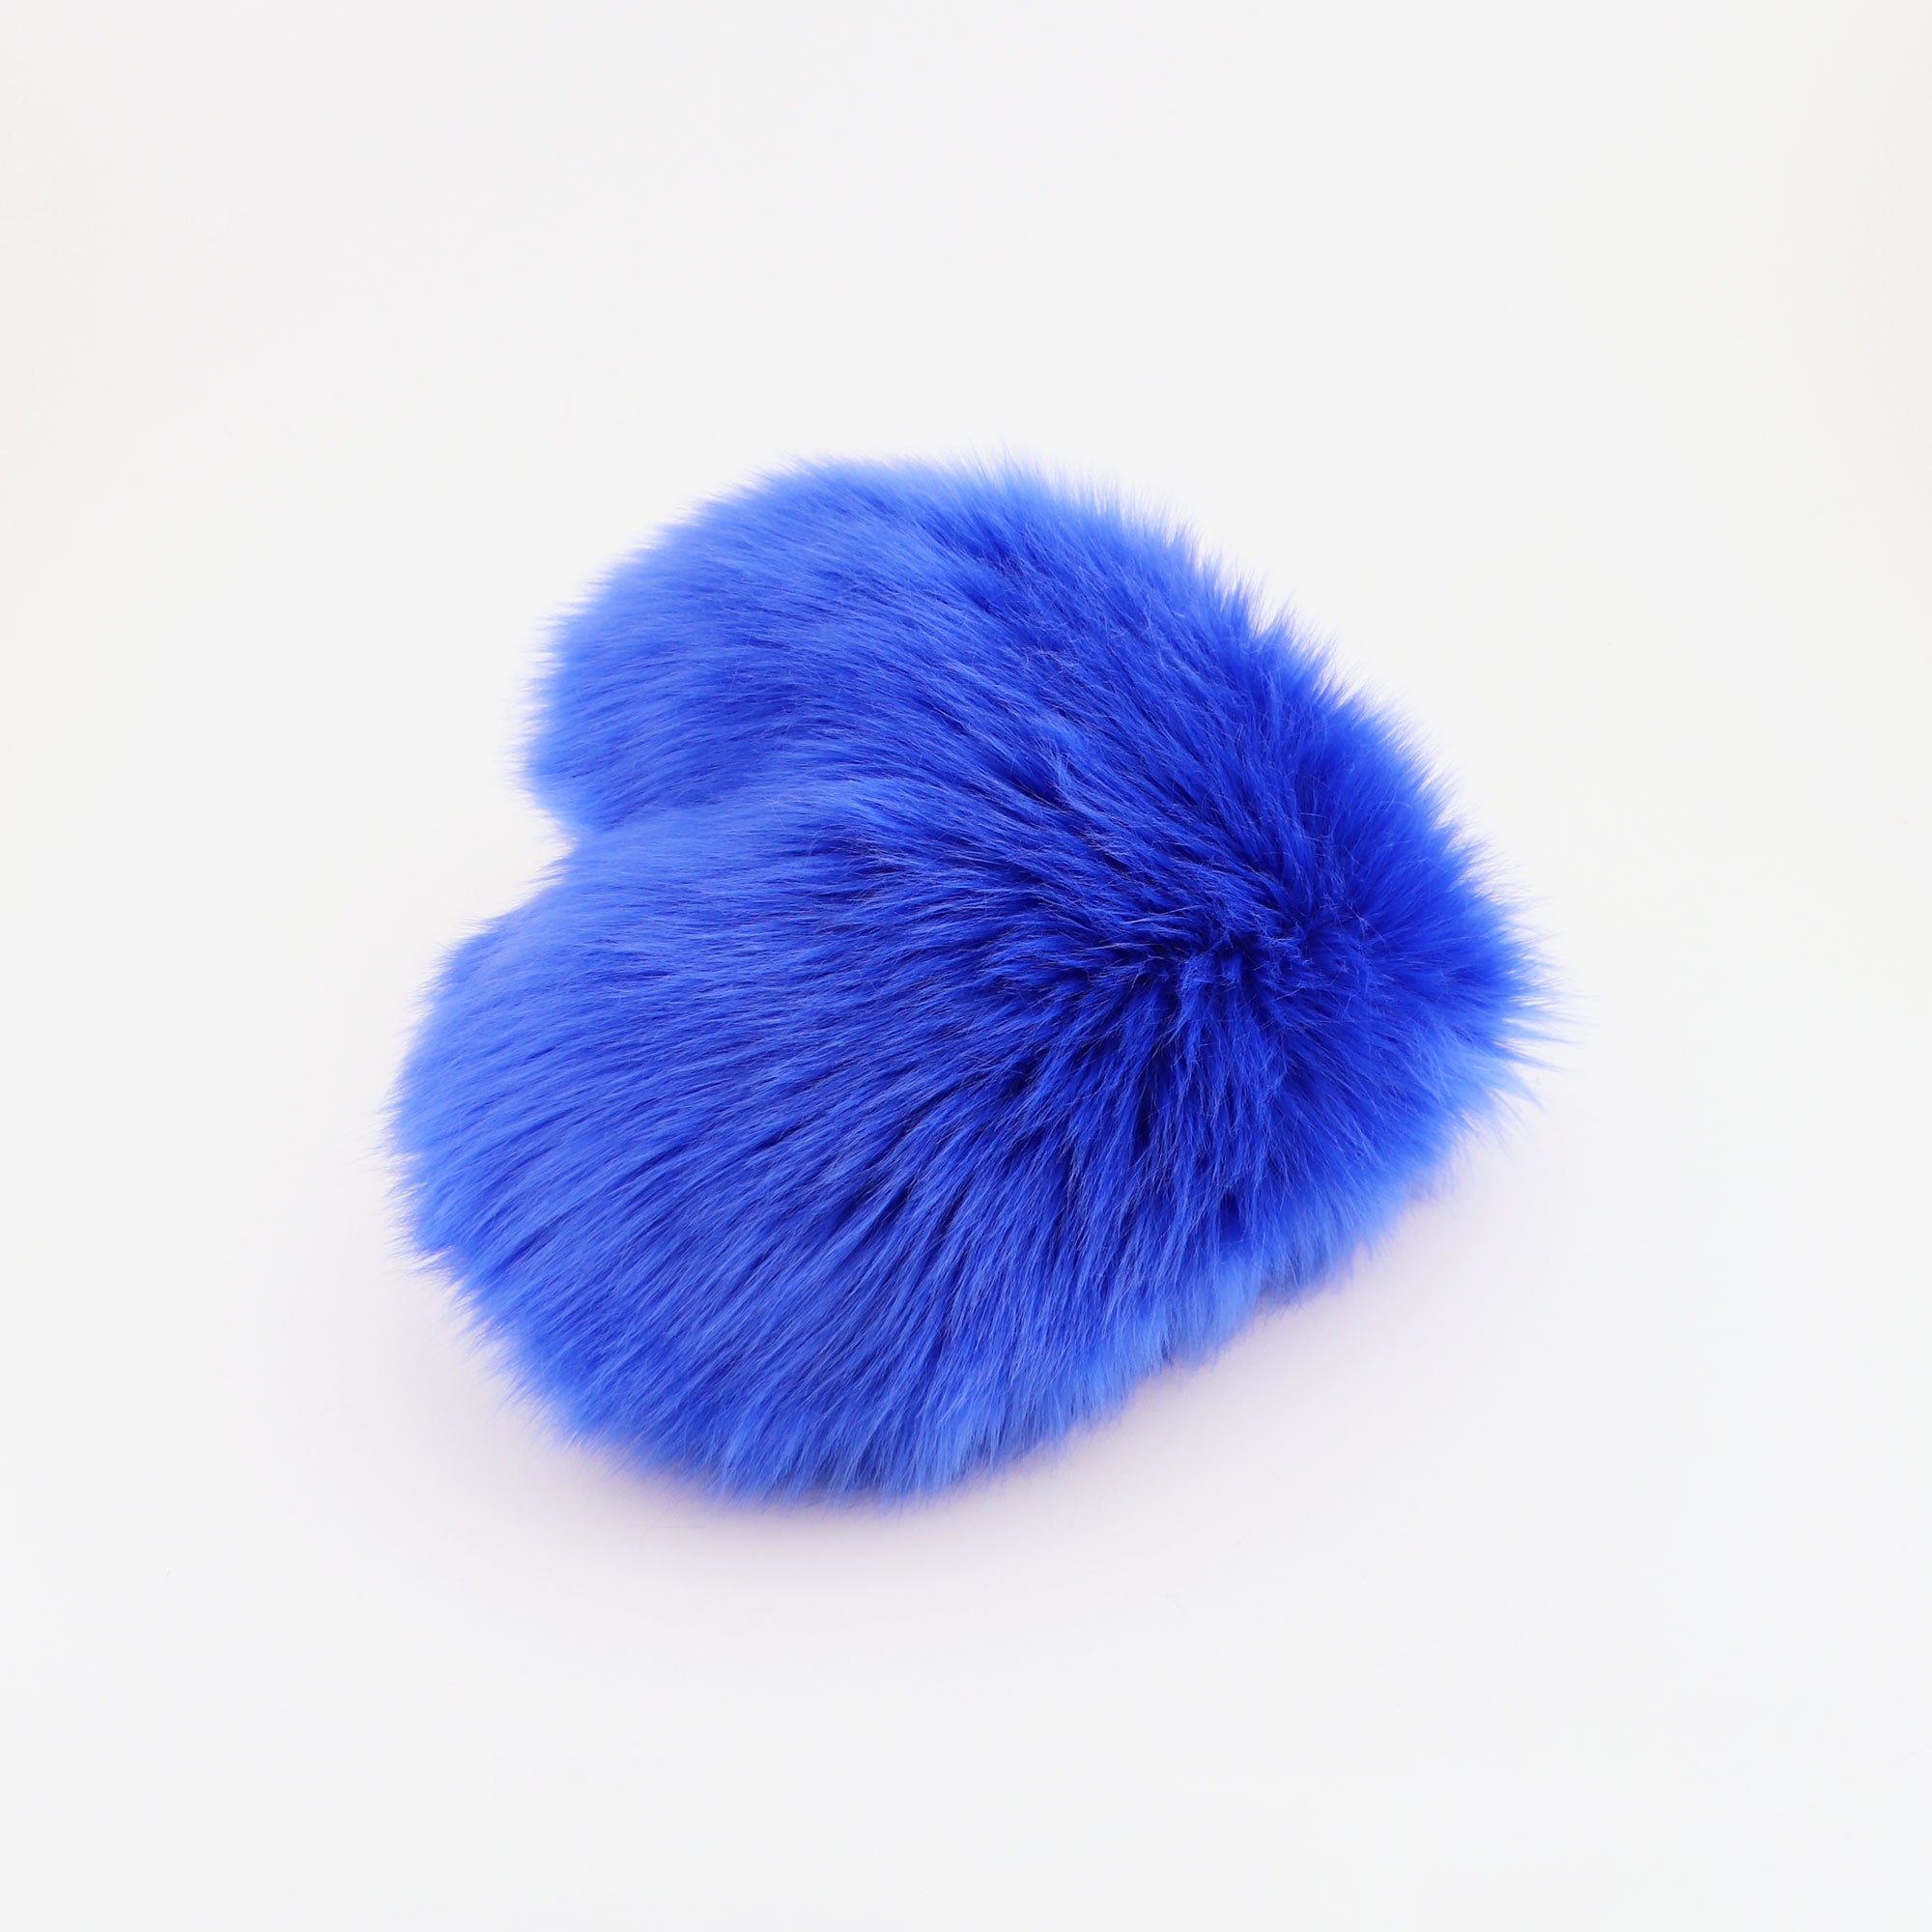 Side view of a Cobalt Blue faux fur heart shaped decorative pillow.